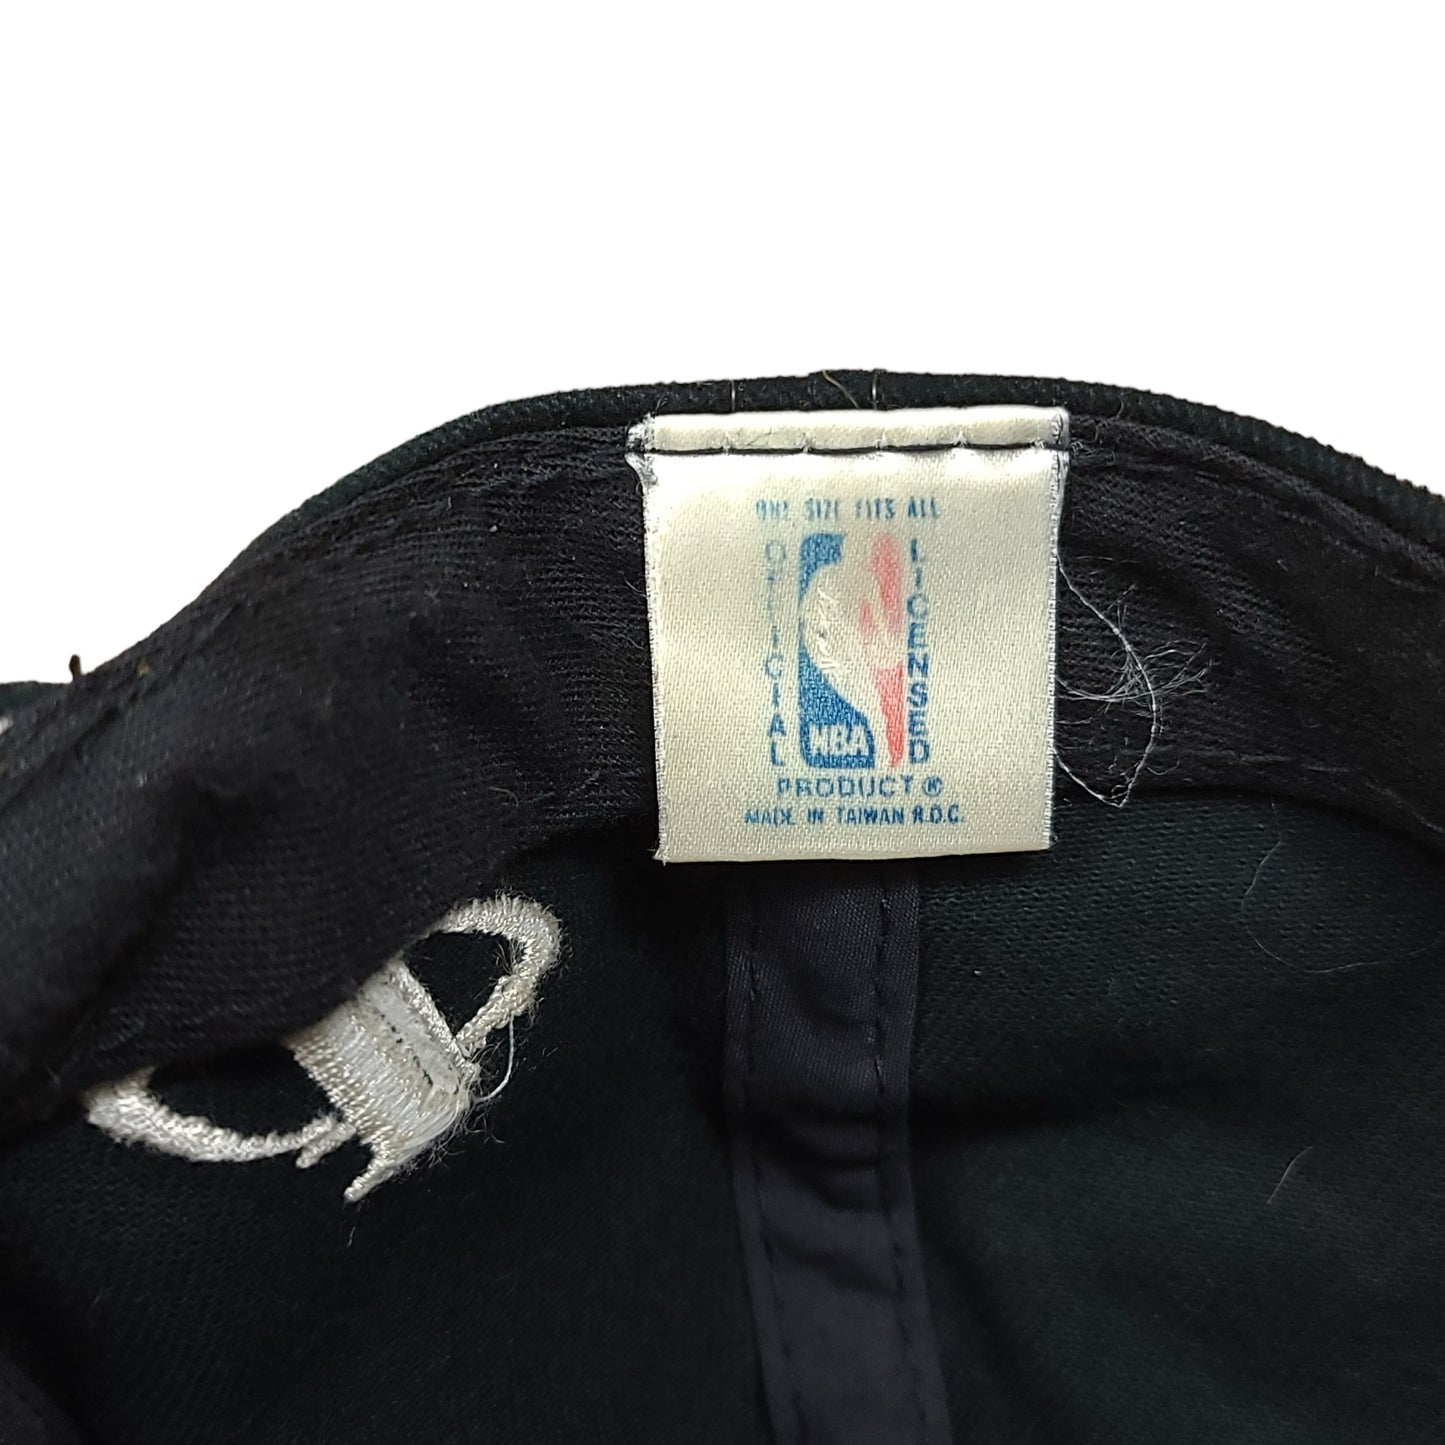 Vintage Chicago Bulls 1997 NBA Champions Black Logo Athletic Snap Back Hat